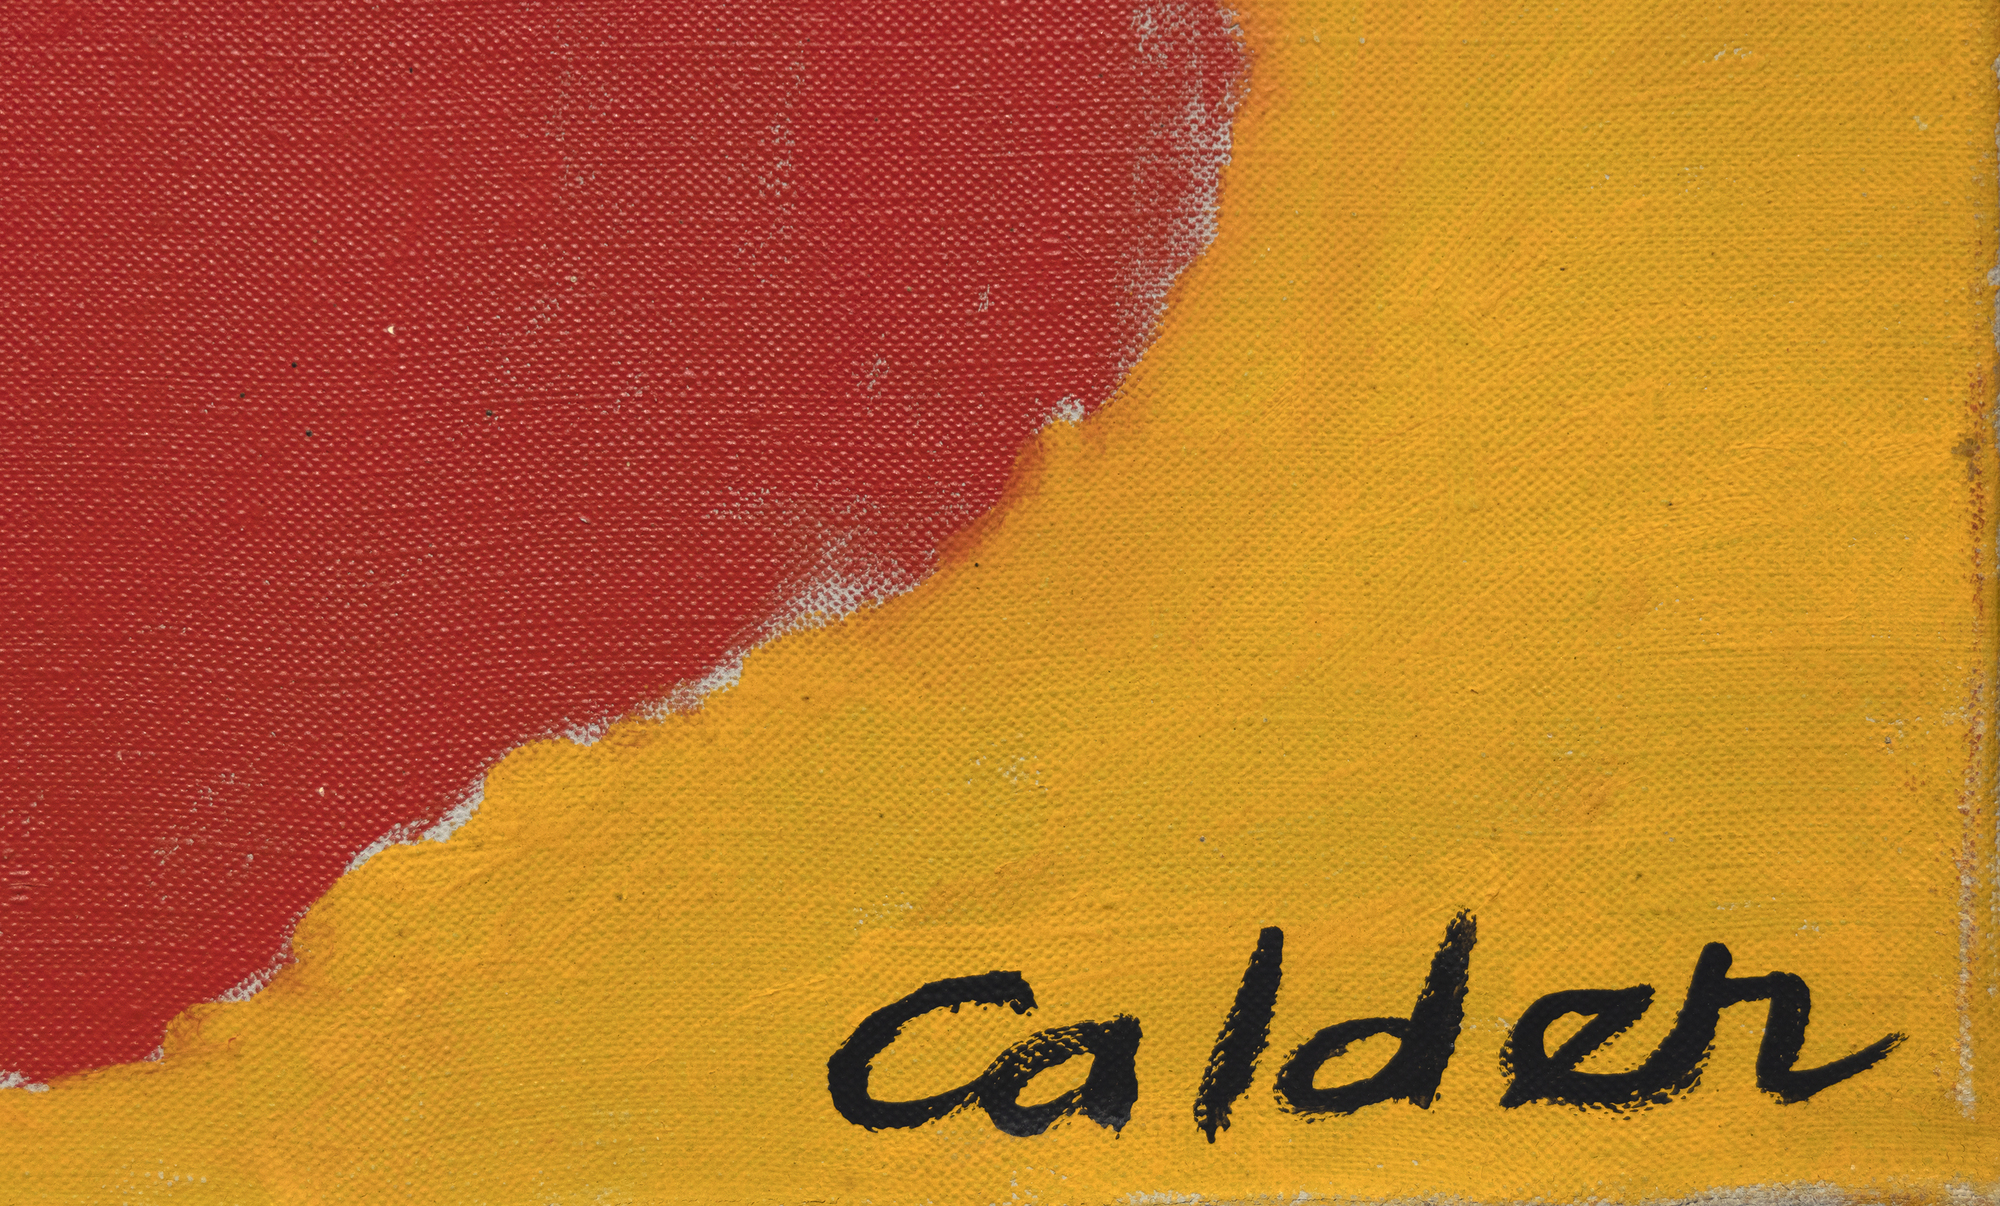 ALEXANDER CALDER - 十字架 - 布面油画 - 28 3/4 x 36 1/4 in.